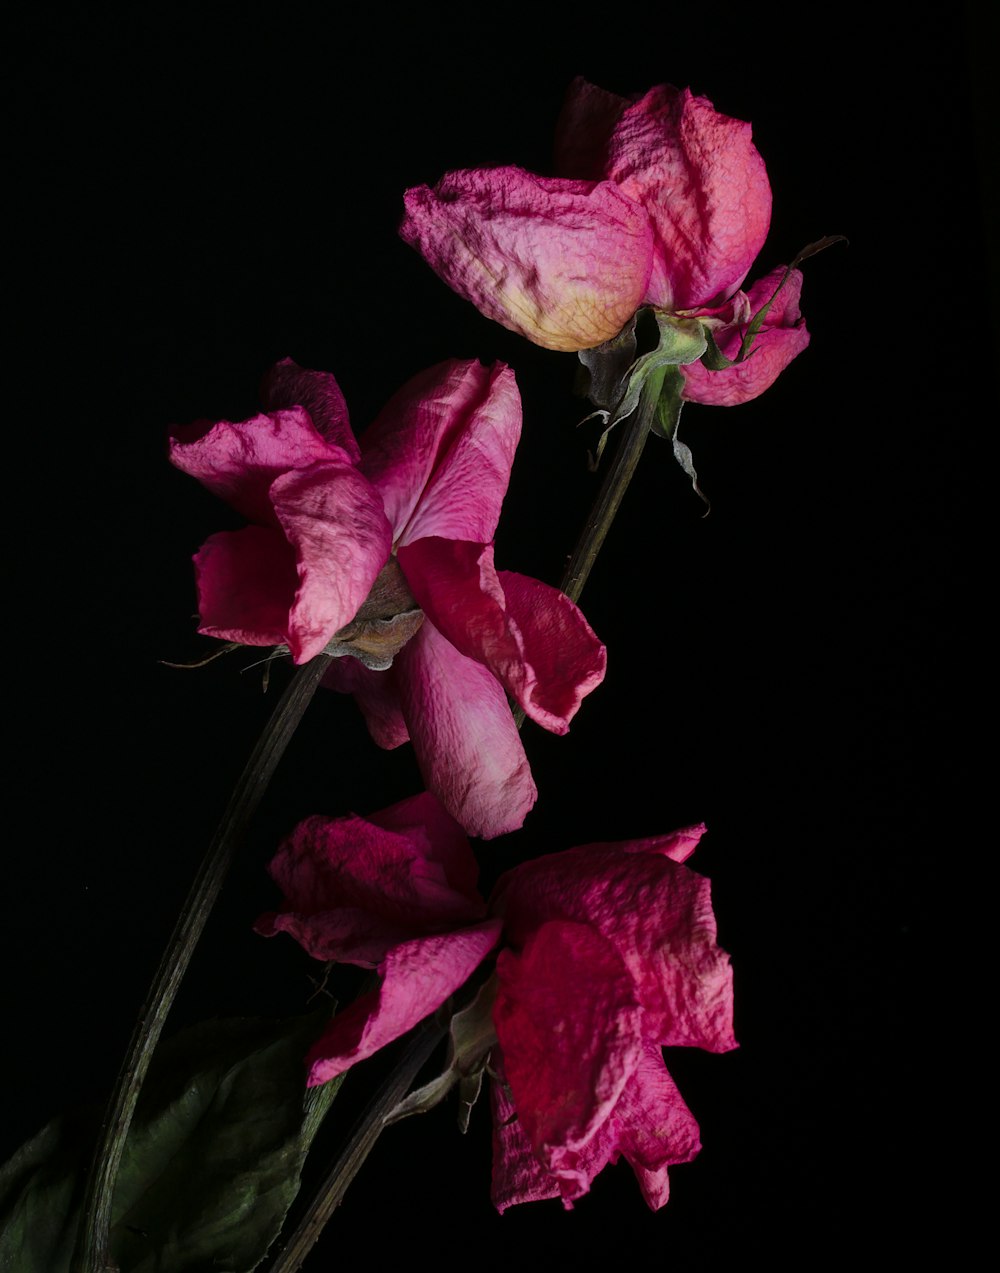 drei rosafarbene Blütenblätter